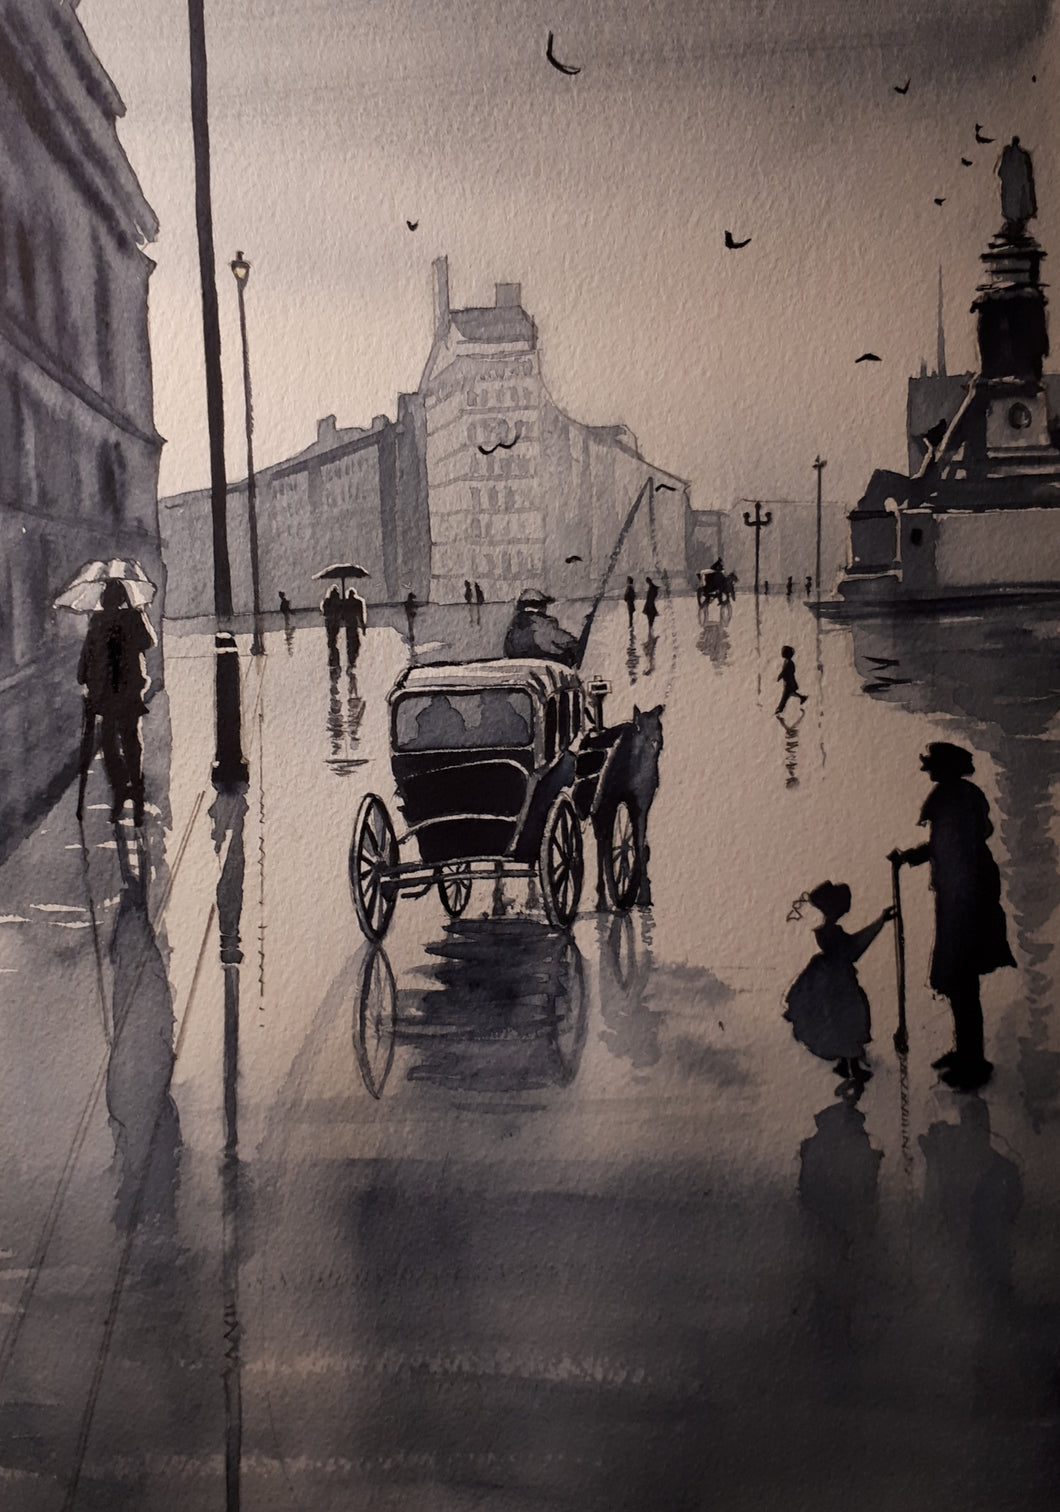 Watercolour painting of Sackville Street, Dublin, Ireland, by Cathal O'Briain